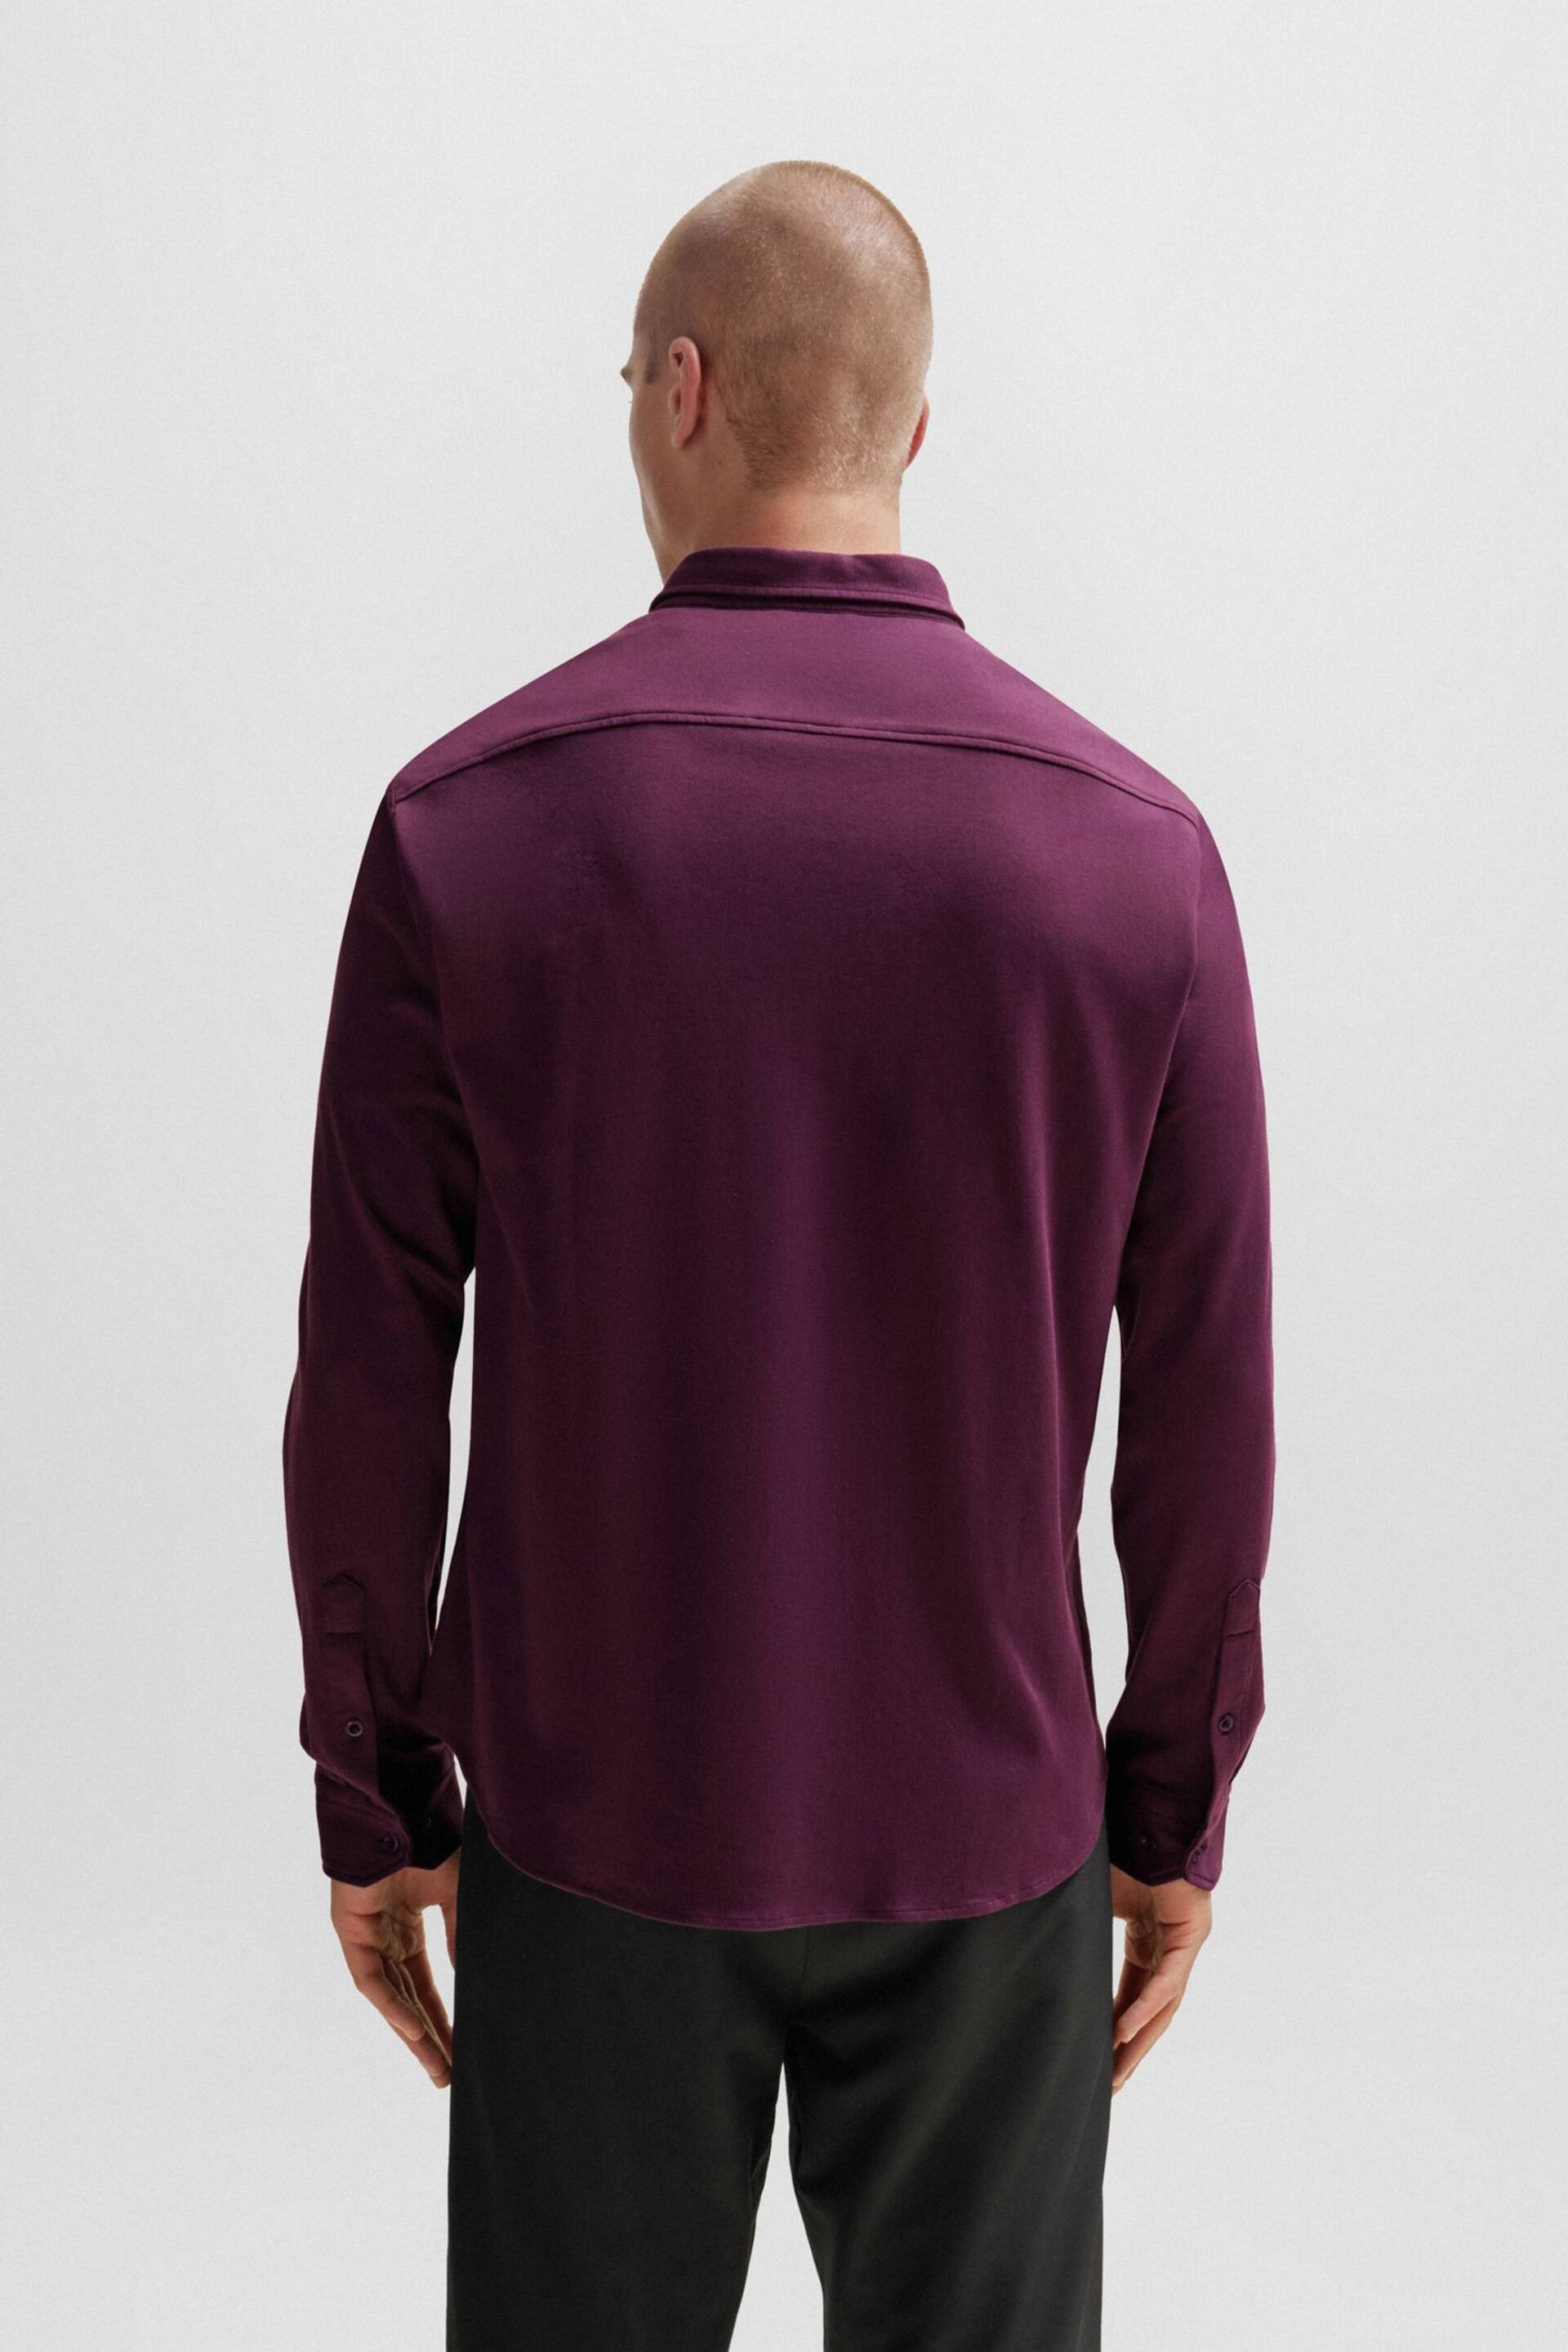 BOSS Purple Cotton Pique Regular Fit Shirt - Image 2 of 6